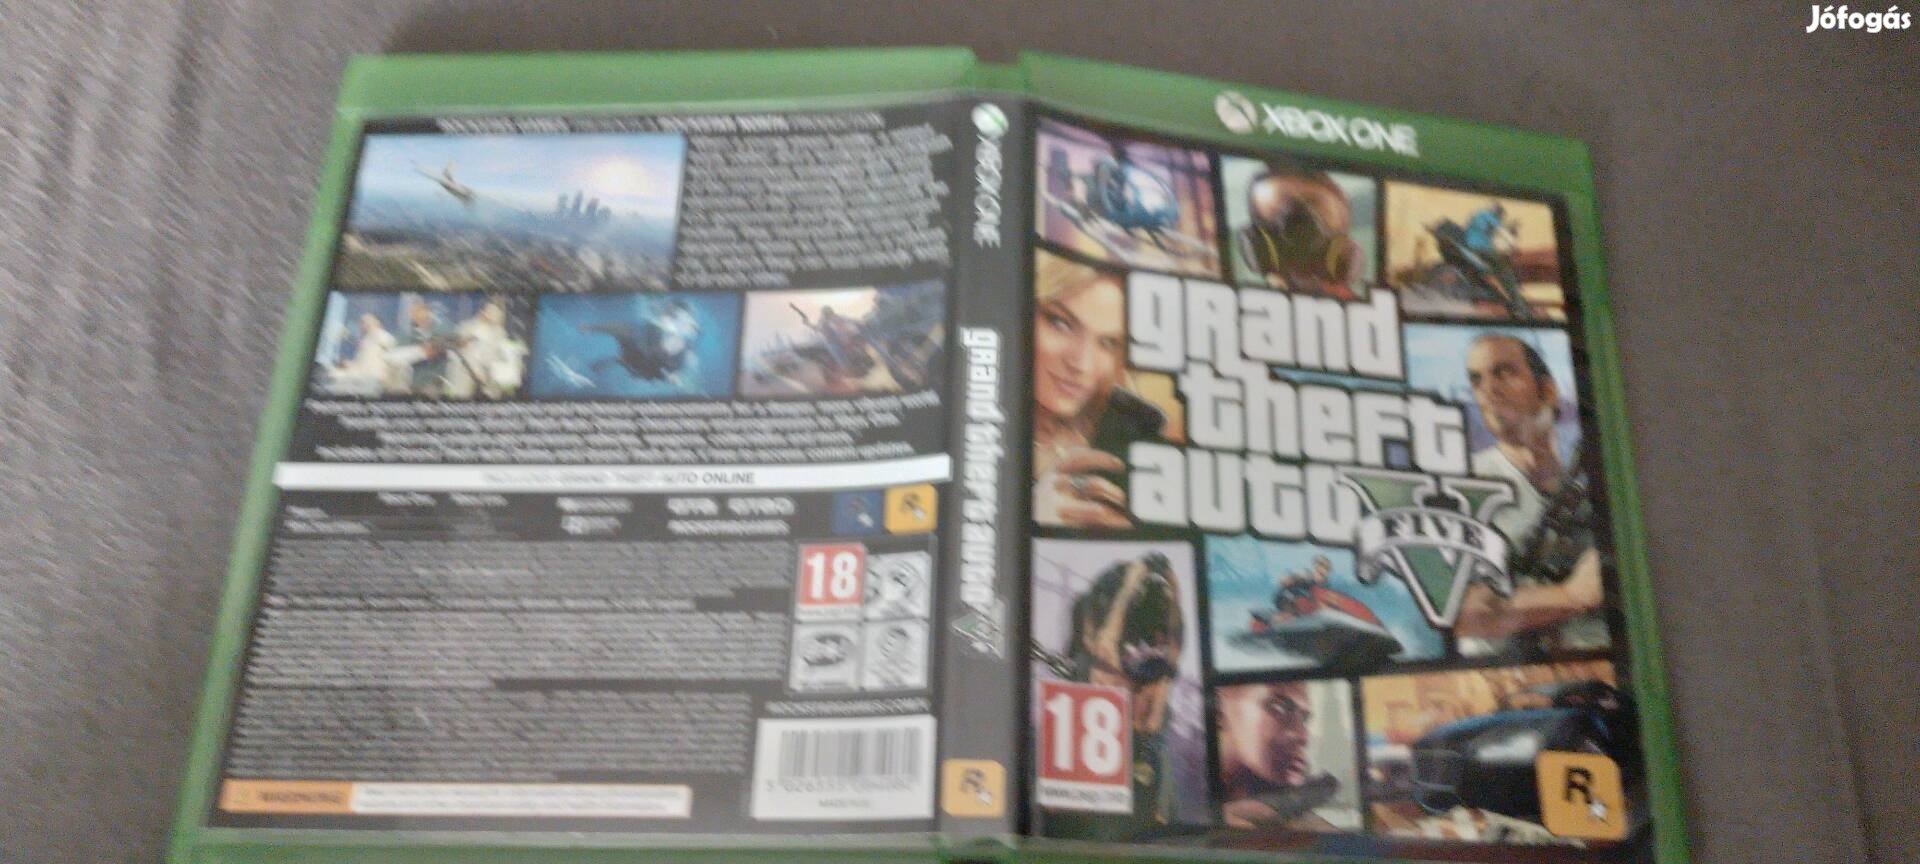 GTA 5(Xbox One)